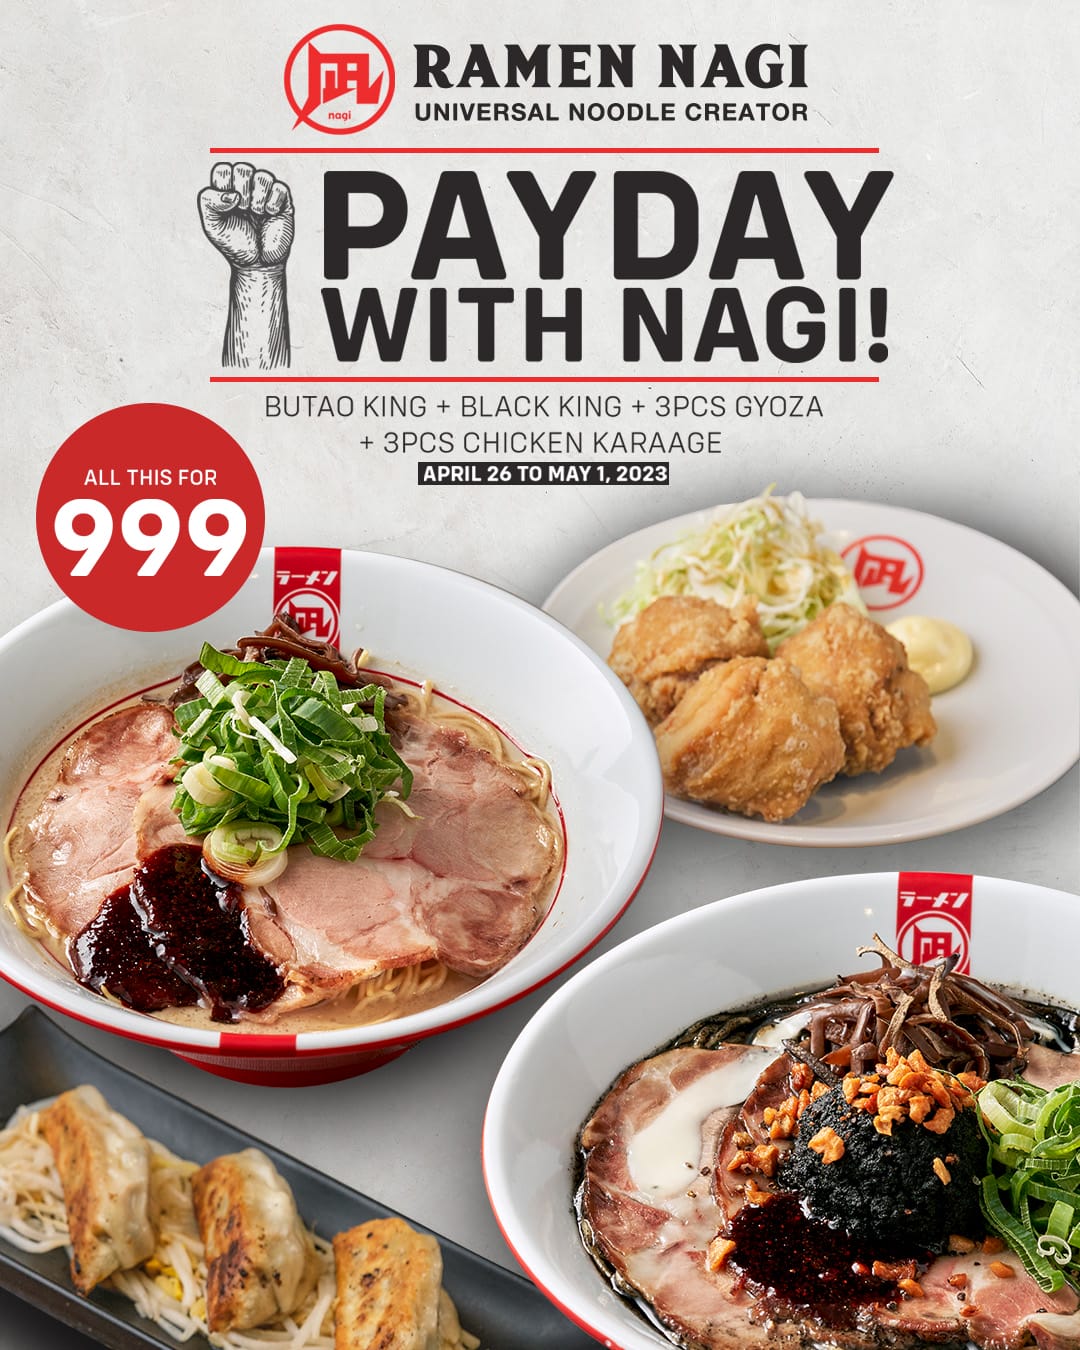 Ramen Nagi Payday with Nagi Promo Deals Pinoy